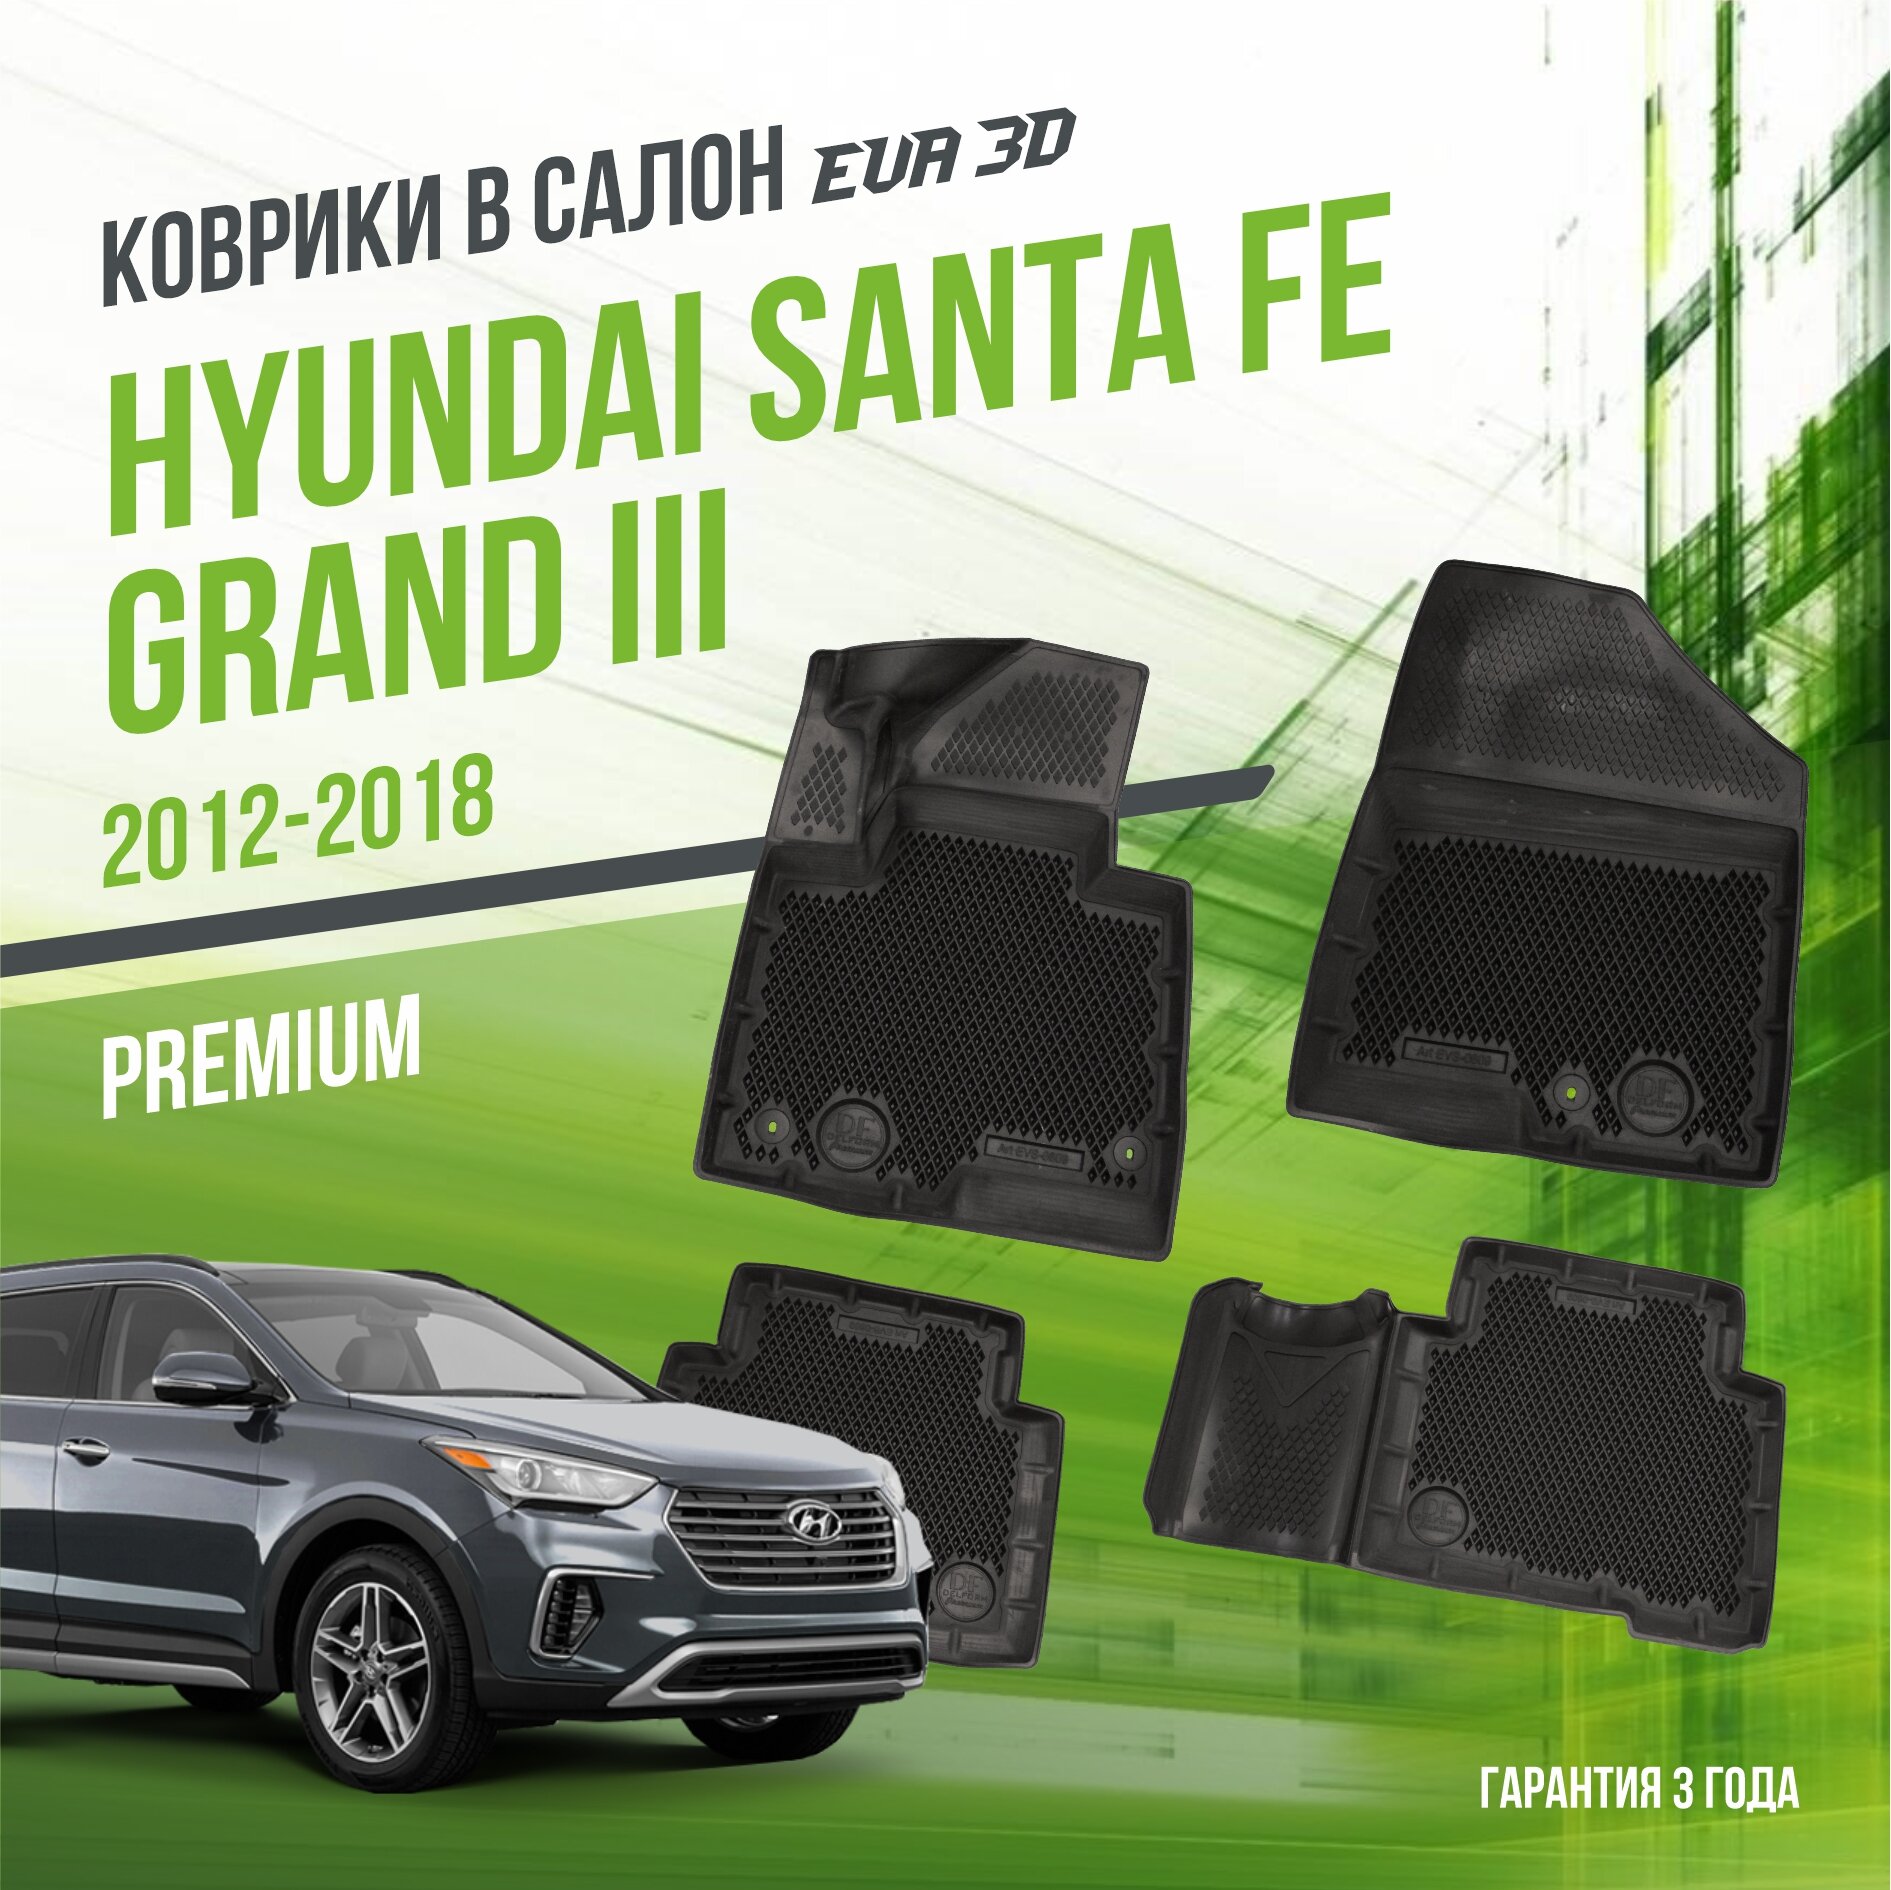 Коврики в салон Hyundai Santa Fe Grand III (2012-2018) / Хюндай Санта Фе Гранд 3 / набор "Premium" ковров DelForm с бортами и ячейками EVA 3D / ЭВА 3Д